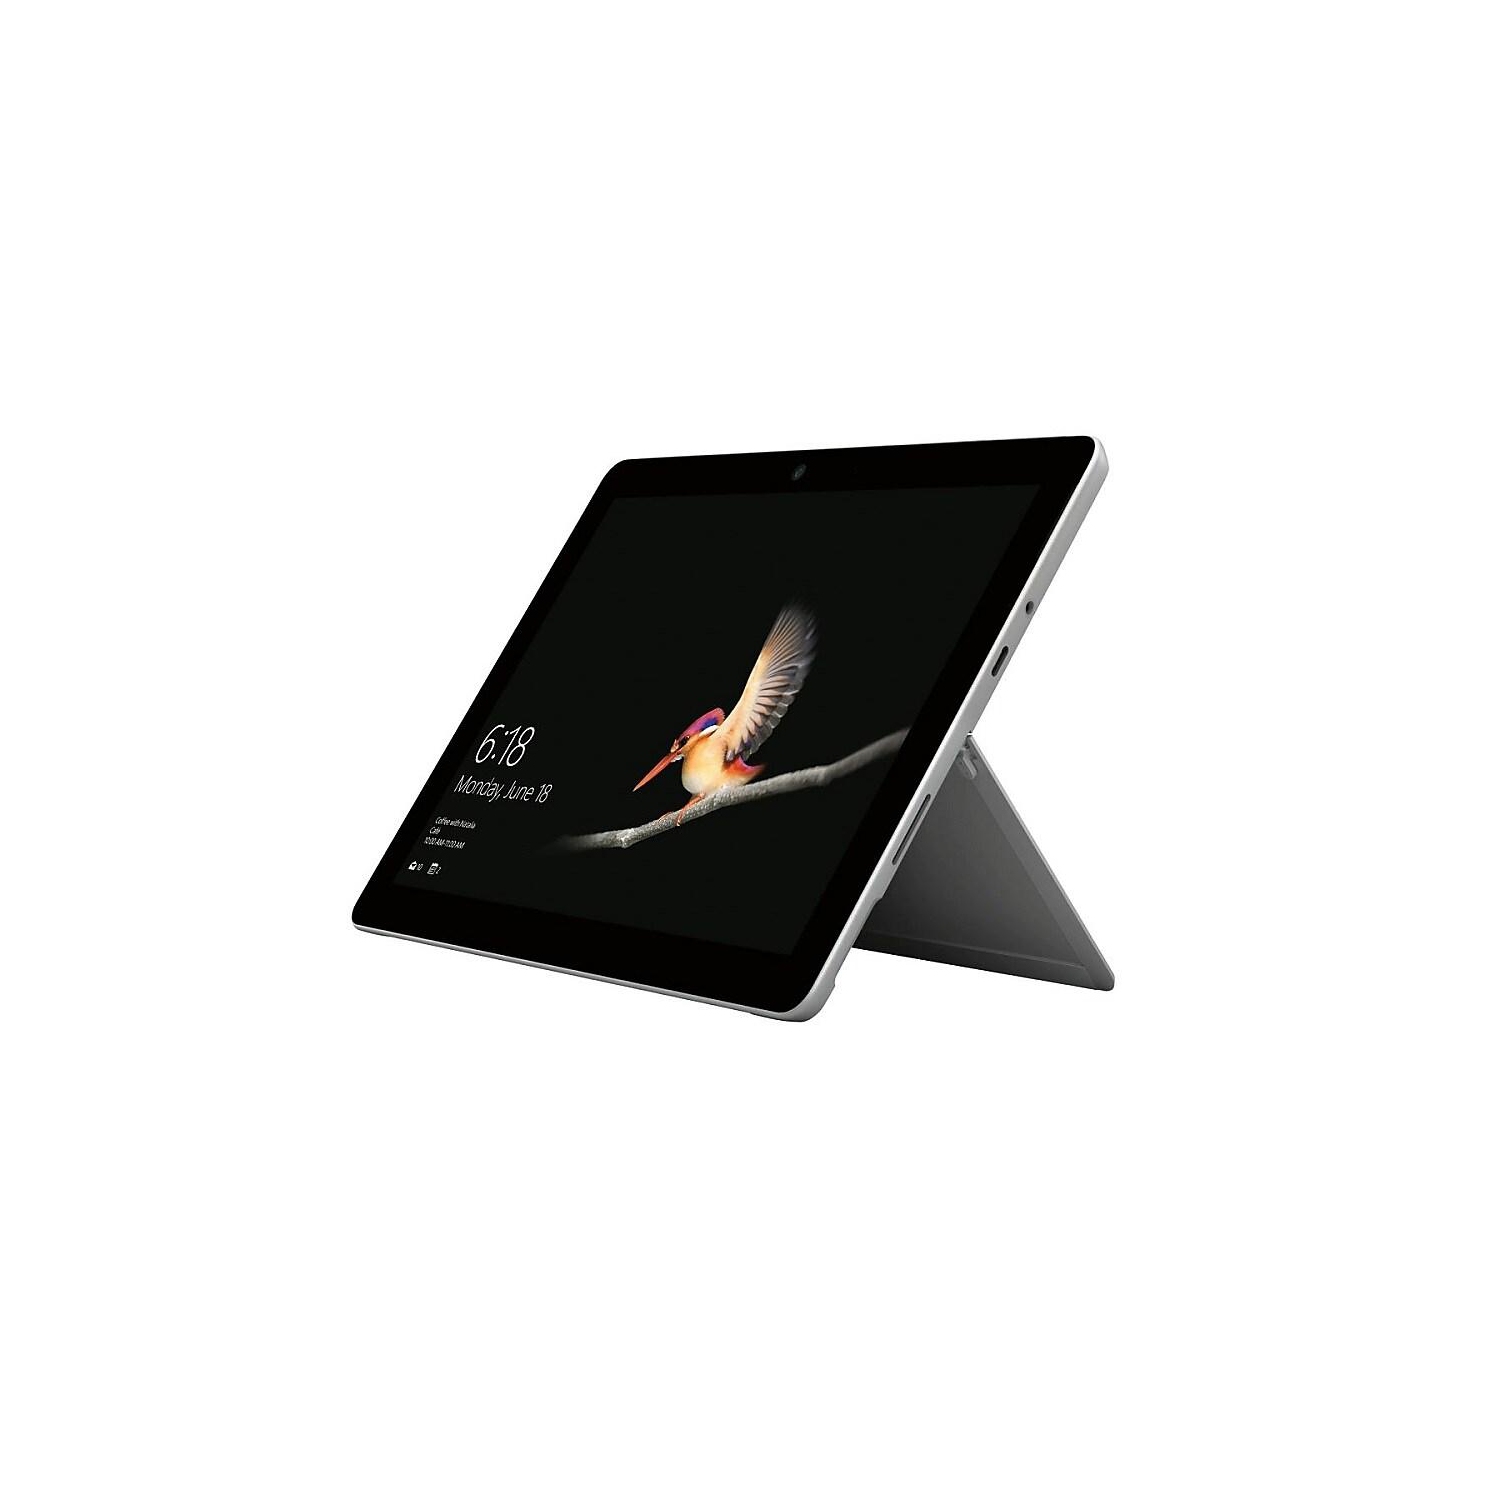 Microsoft Surface Go 10” PixelSense Tablet - Intel Pentium Gold 4415y, 128GB SSD, 8GB RAM, Windows 10 Professional * New in Box *